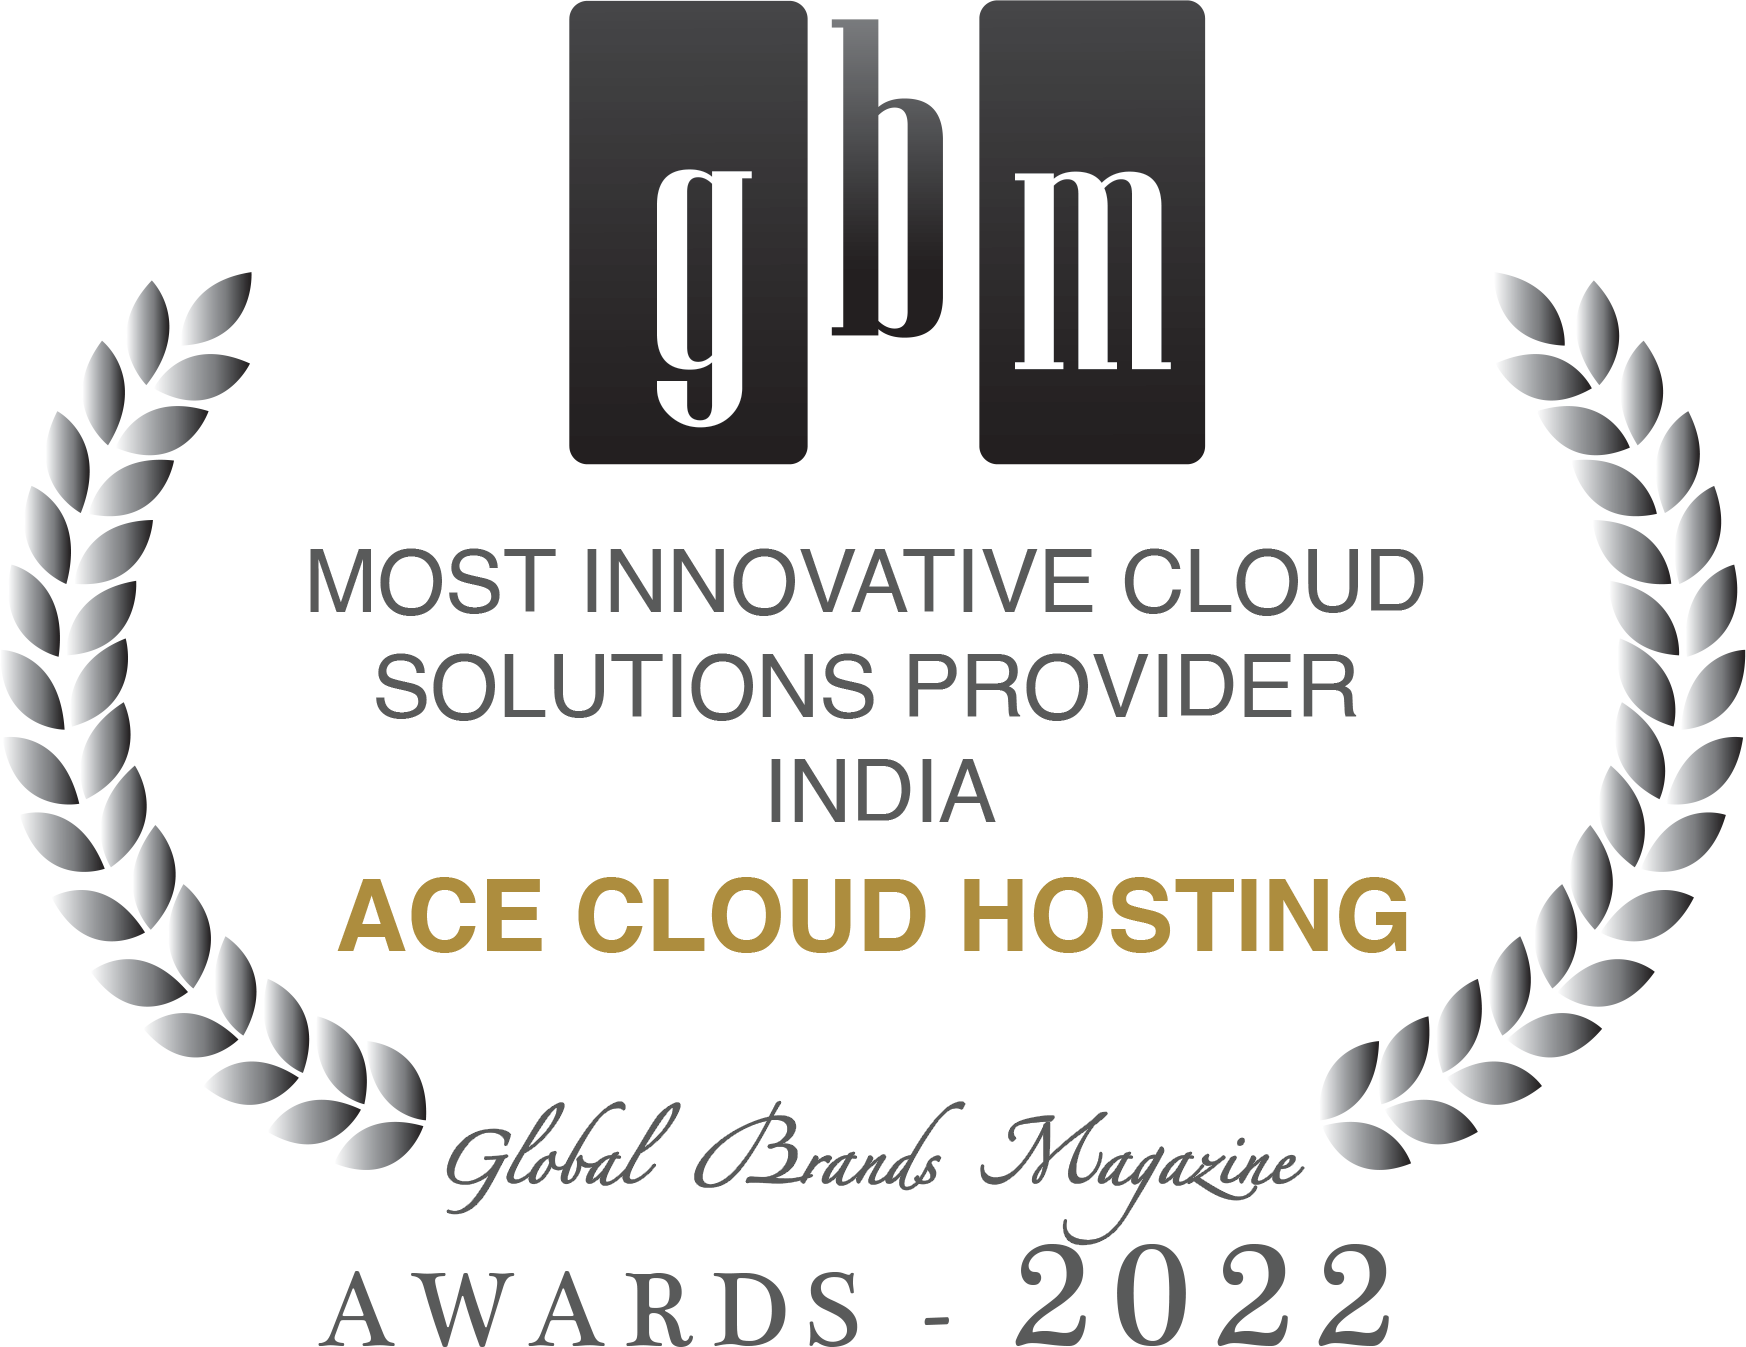 GBM-most-innovetive-award